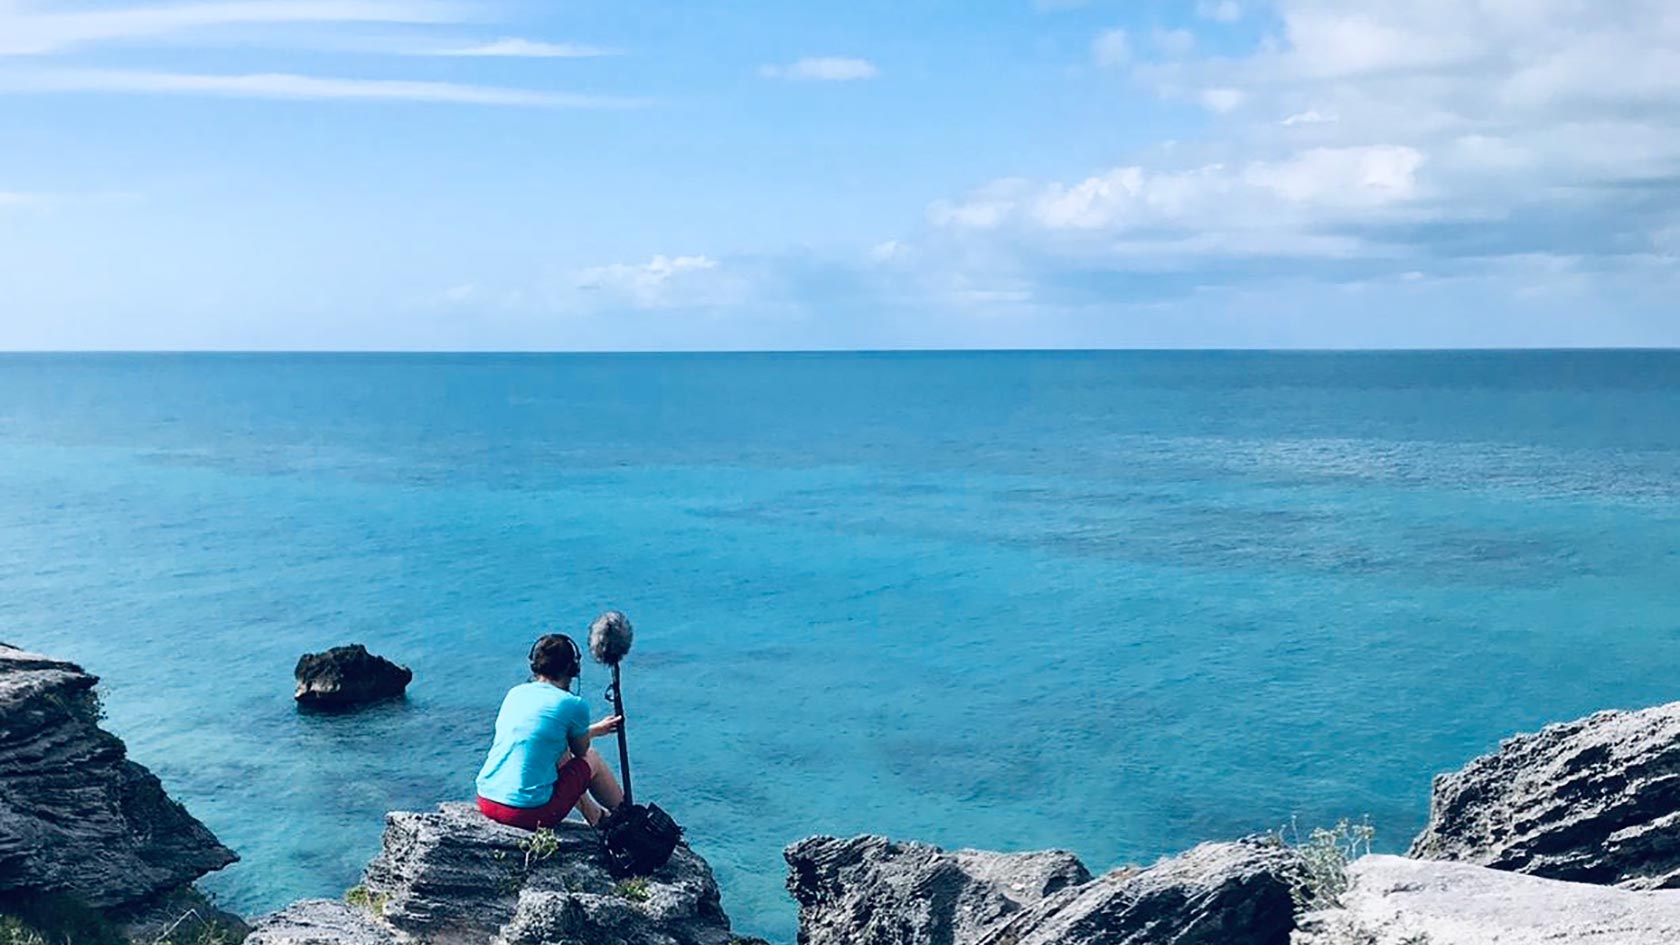 Ellie catching some 'waves' in Bermuda